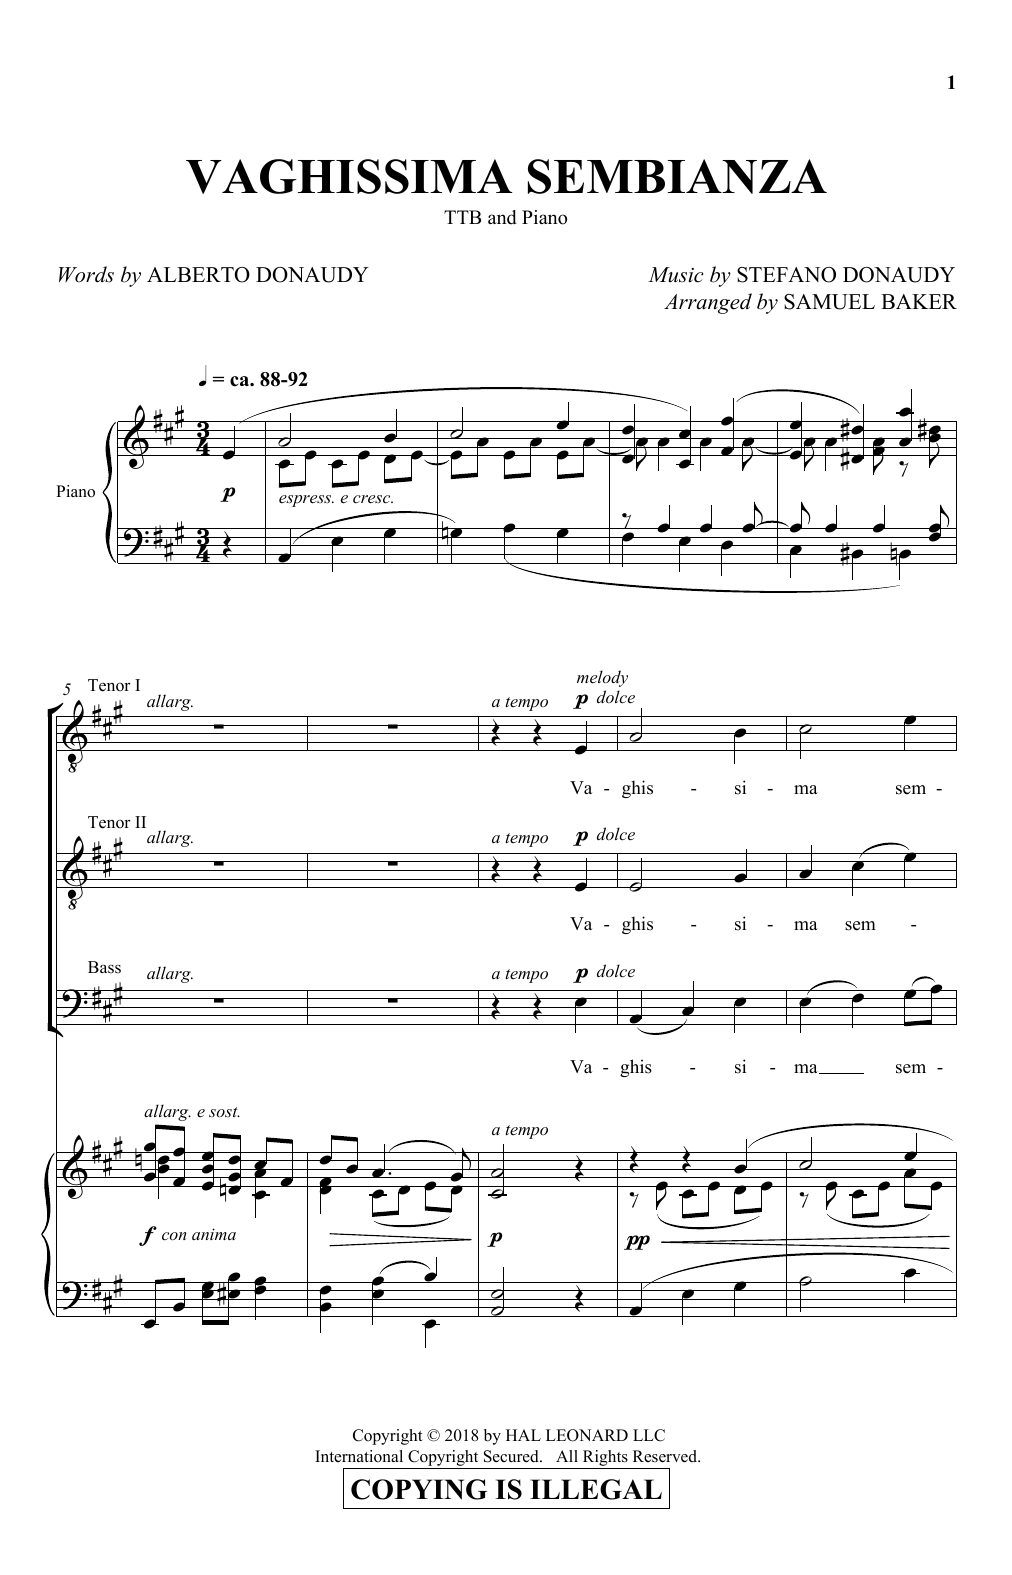 Albert Donaudy & Stefano Donaudy Vaghissima Sembianza (arr. Samuel Baker) sheet music notes and chords arranged for TTBB Choir